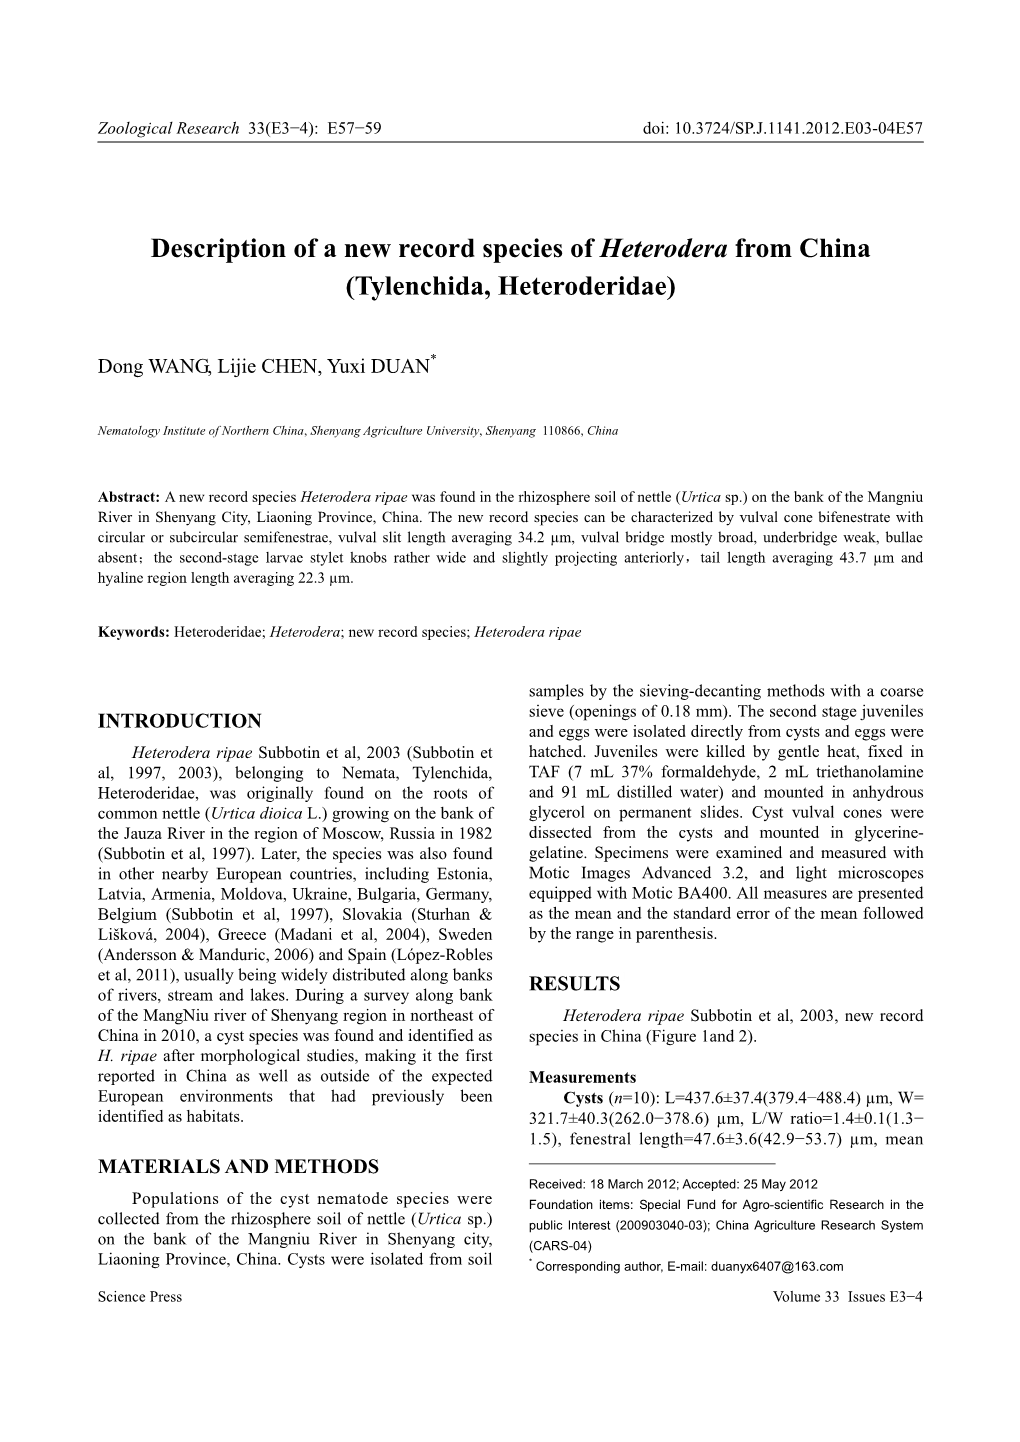 Description of a New Record Species of Heterodera from China (Tylenchida, Heteroderidae)